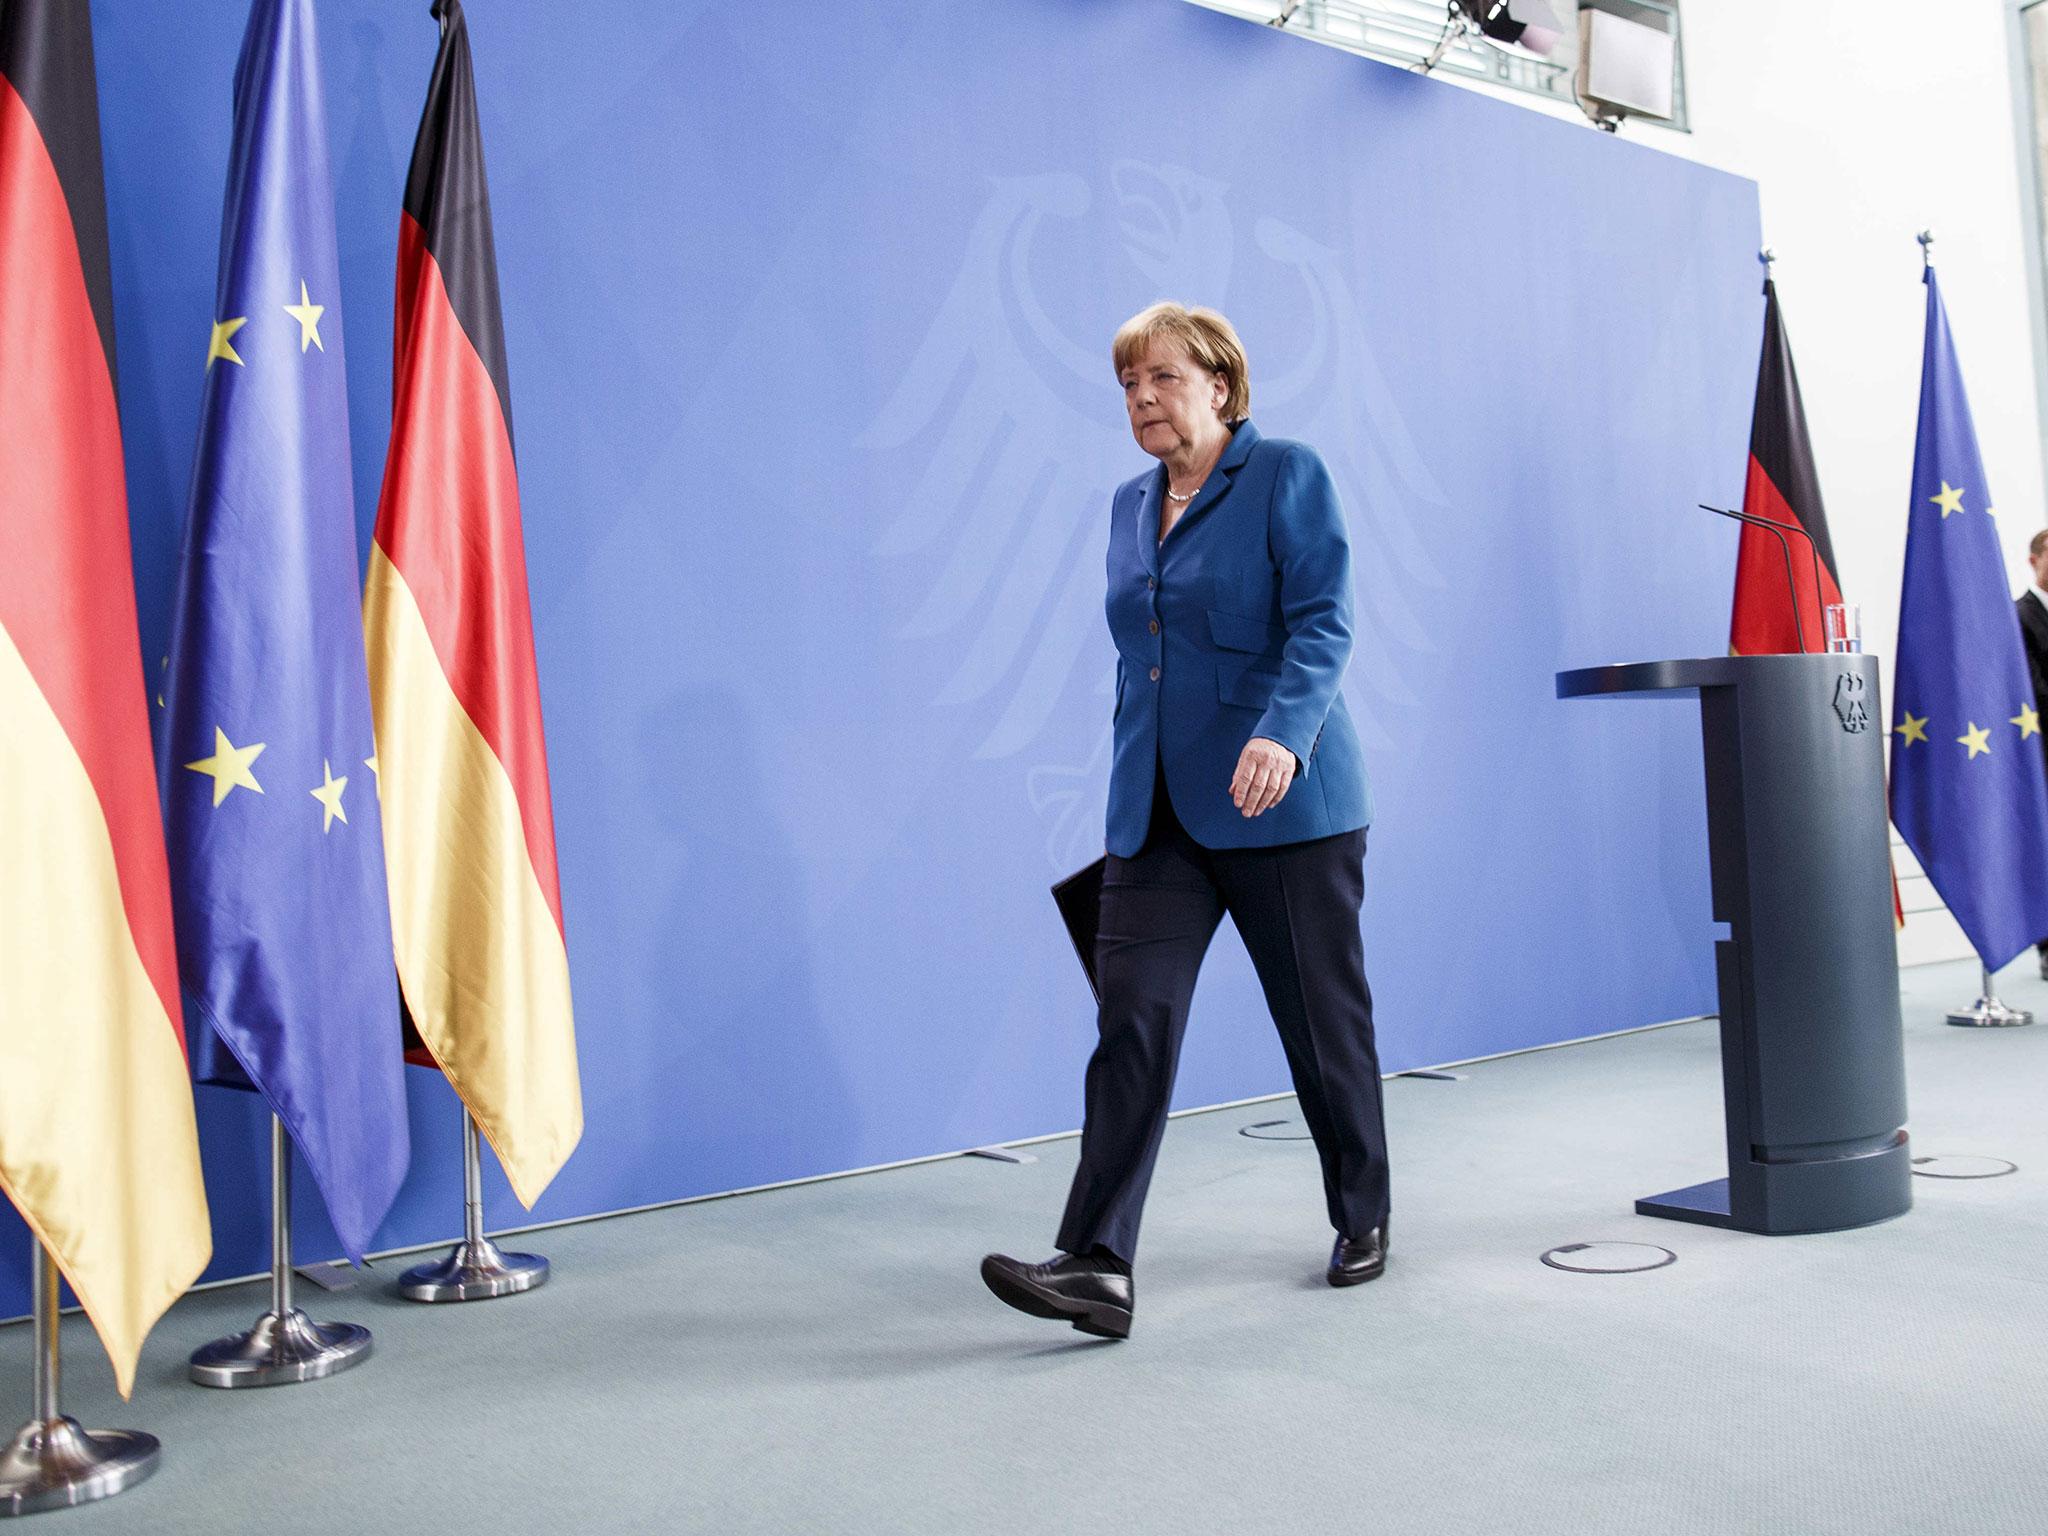 Chancellor Angela Merkel is under pressure following the recent attacks